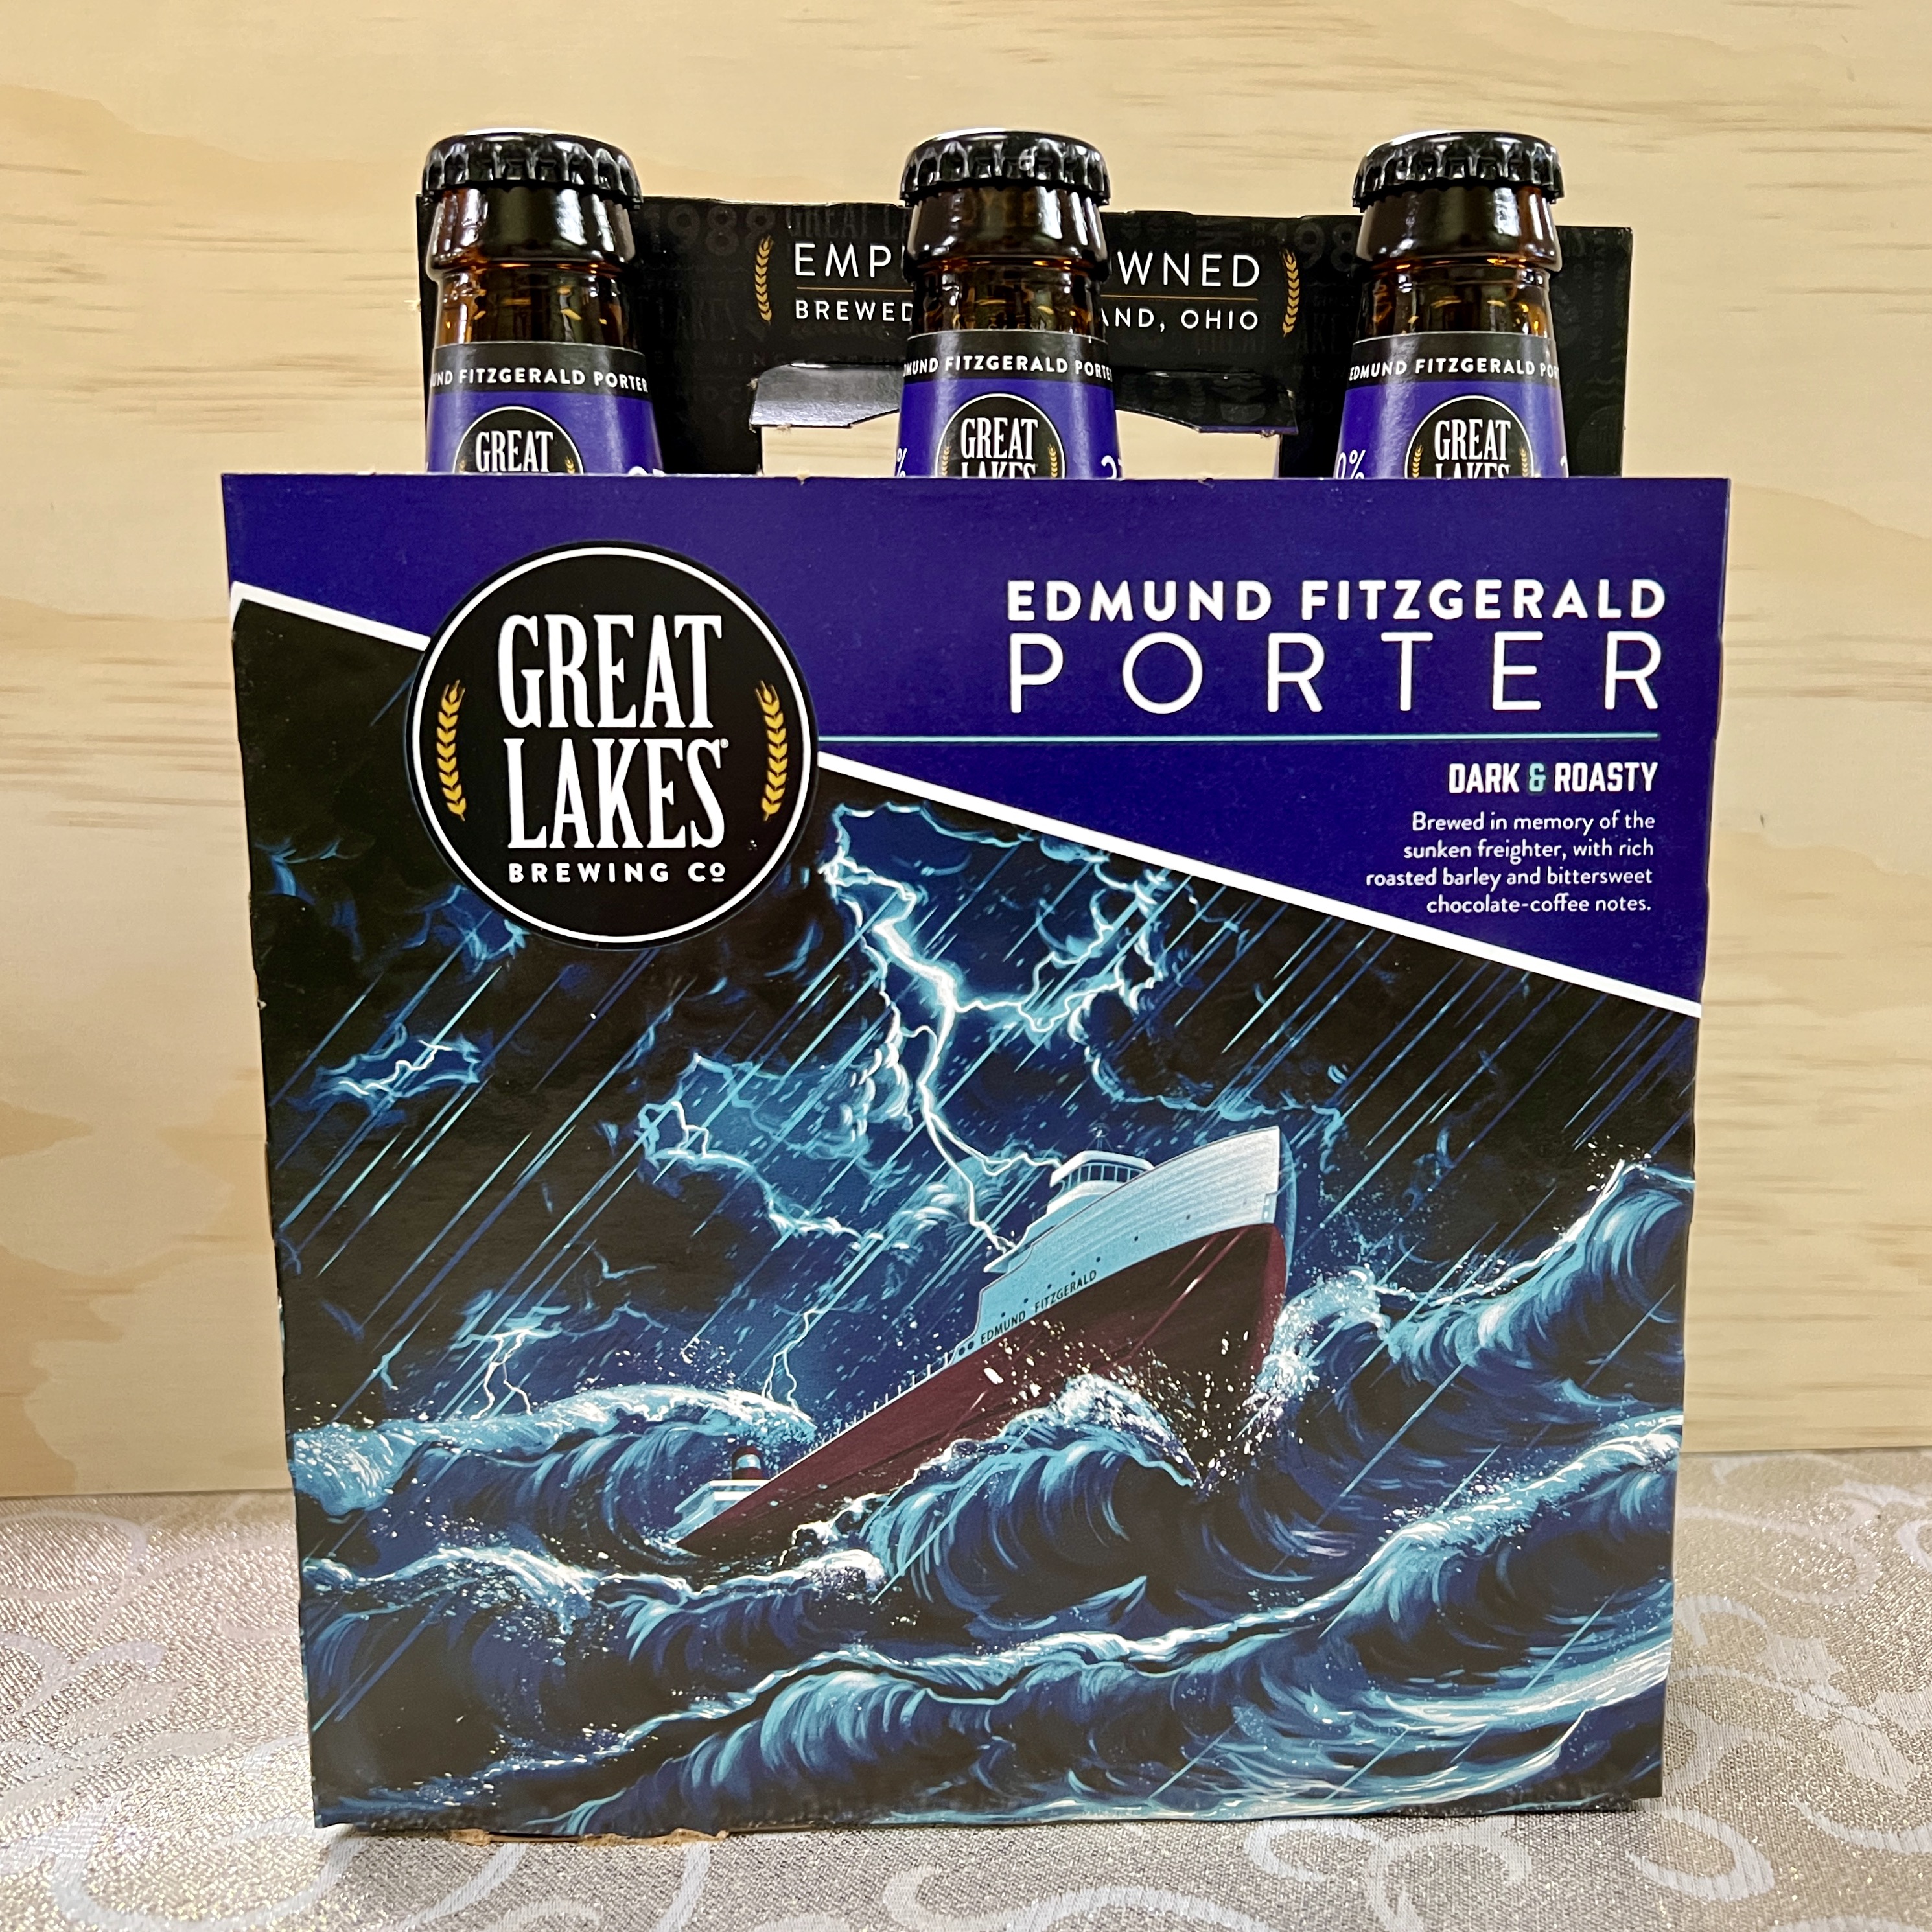 Great Lakes Edmund Fitzgerald Porter 6 x 12oz bottles